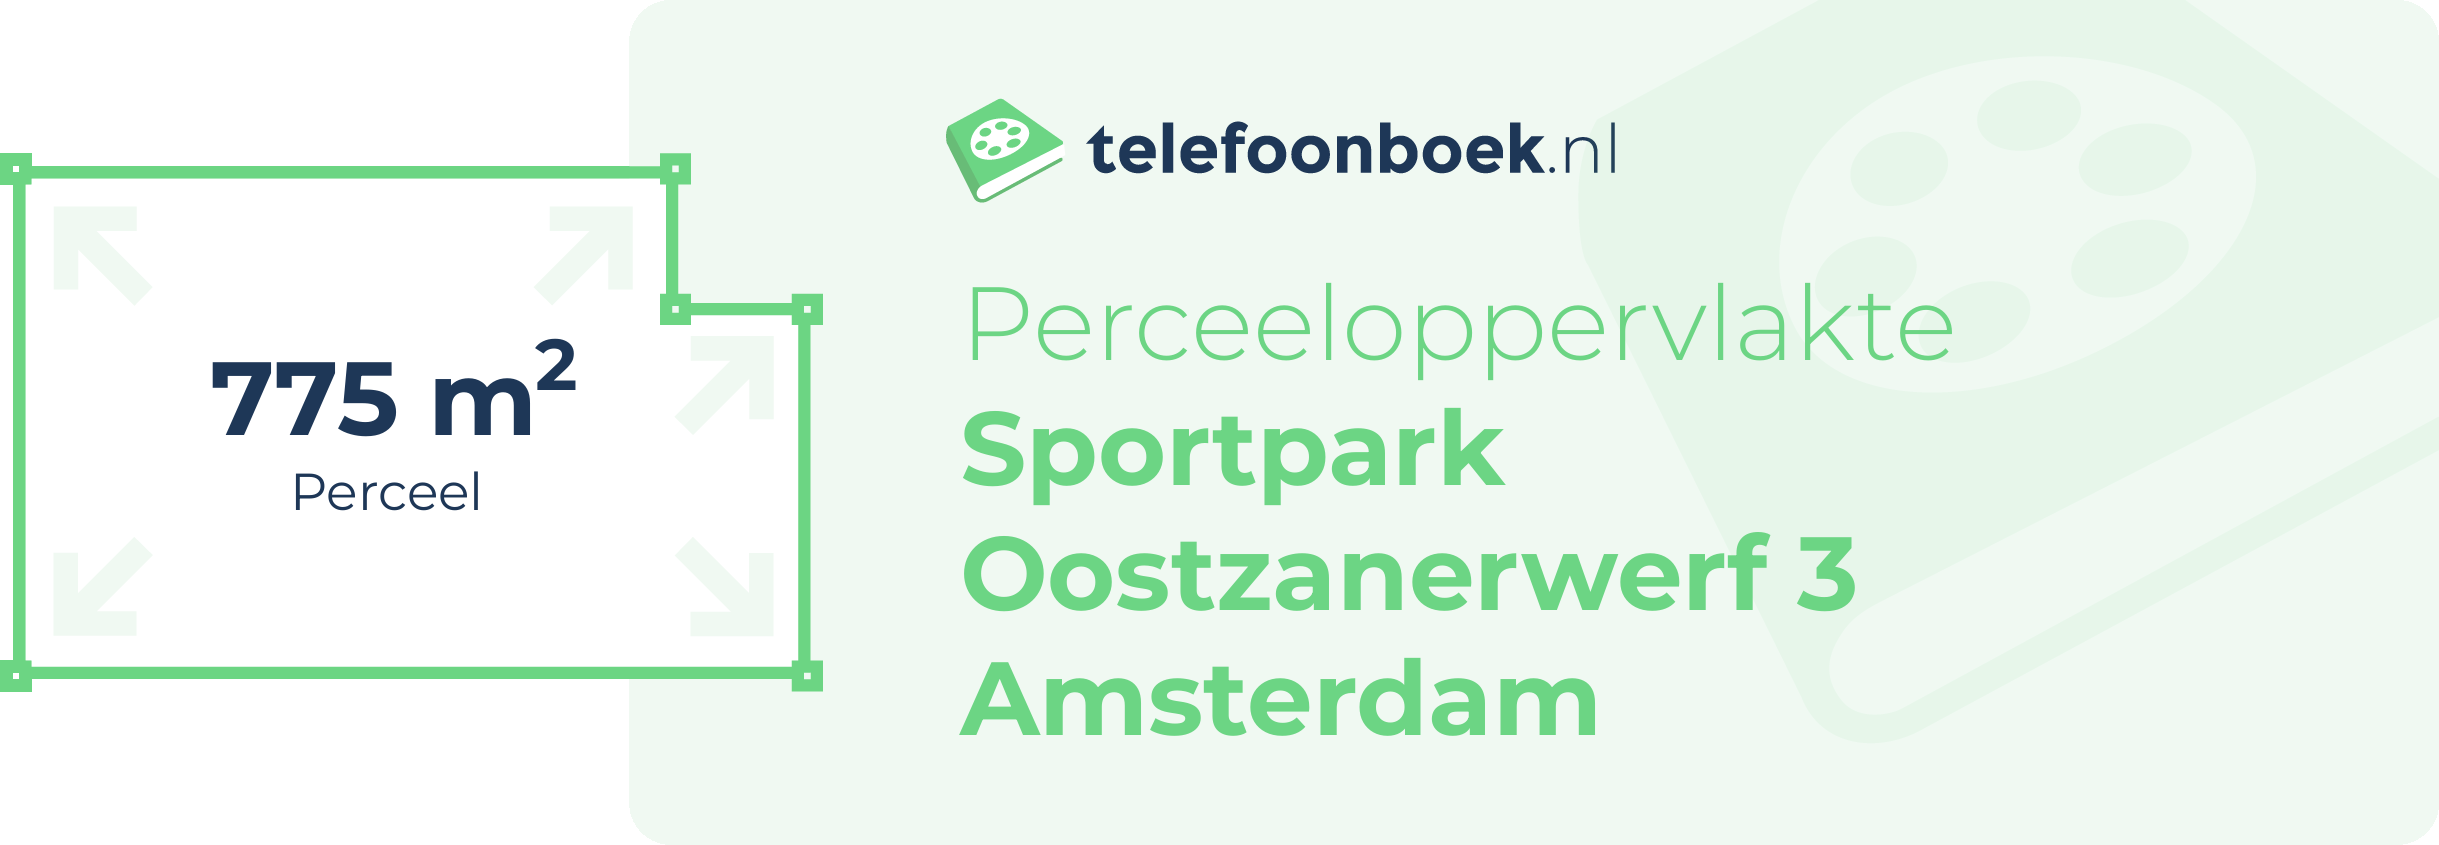 Perceeloppervlakte Sportpark Oostzanerwerf 3 Amsterdam